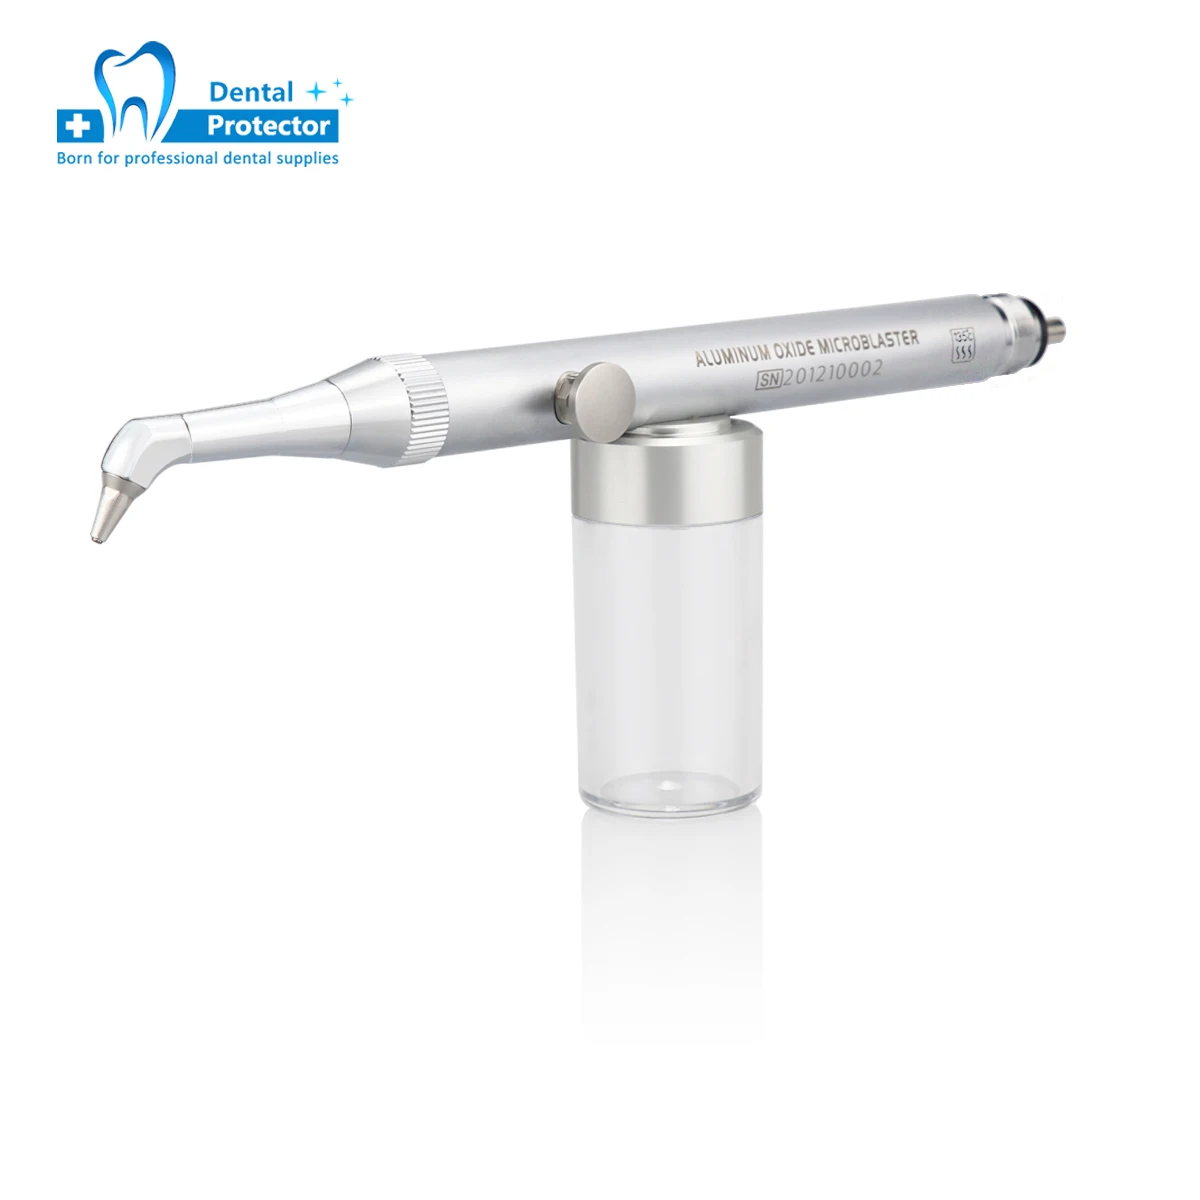 Dental Aluminum Oxide Air Abrasion Polisher Dental Alumina Microblaster Dental Sandblasting Equipment without Tube